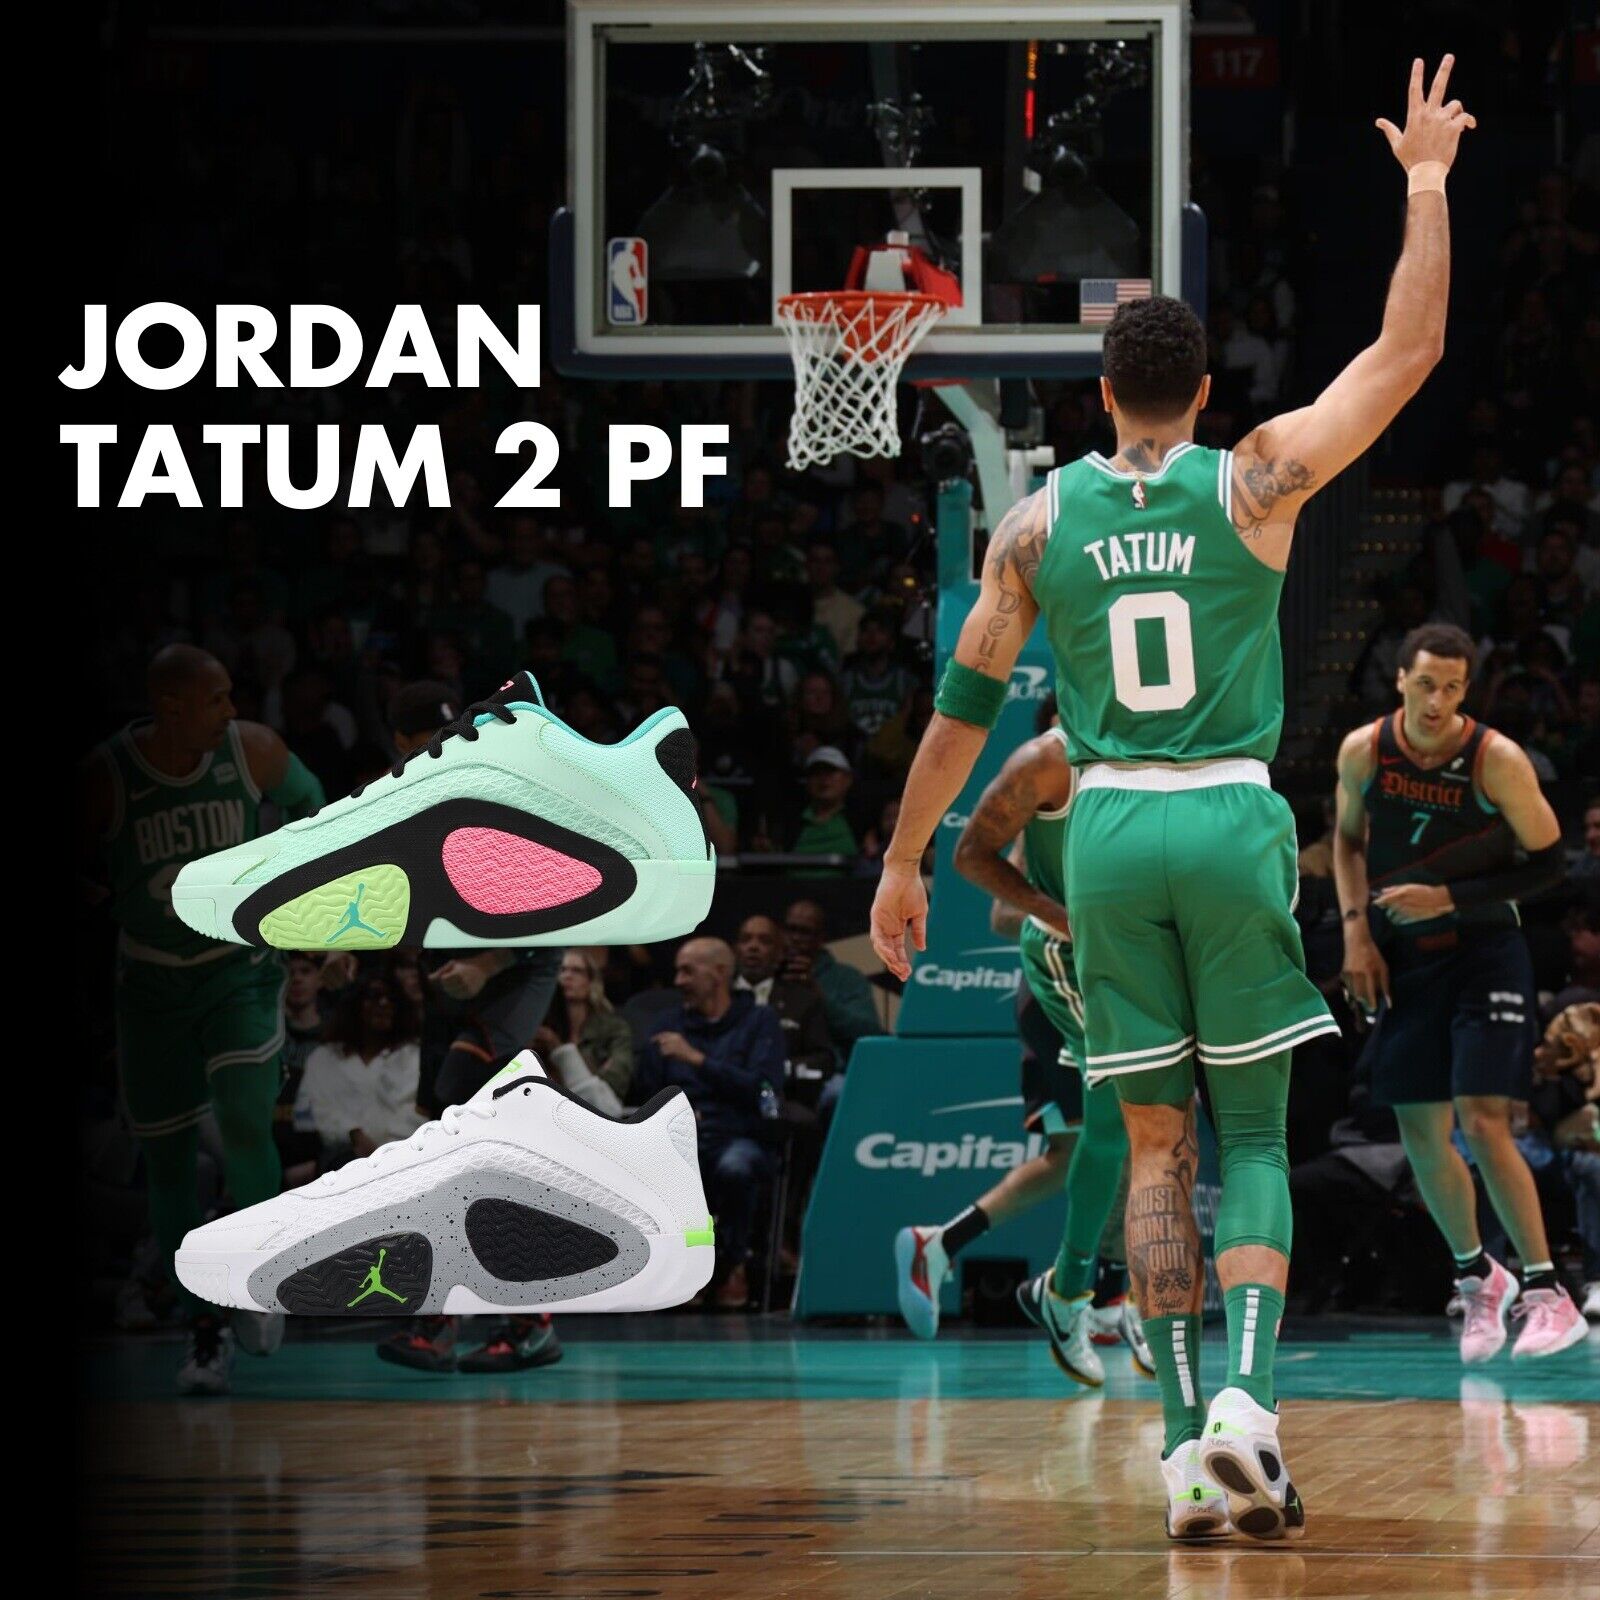 Fancy Nike Jordan Tatum 2 PF Jayson Tatum Men Sports Basketball Hoopers Shoes Pick 1 on eBay